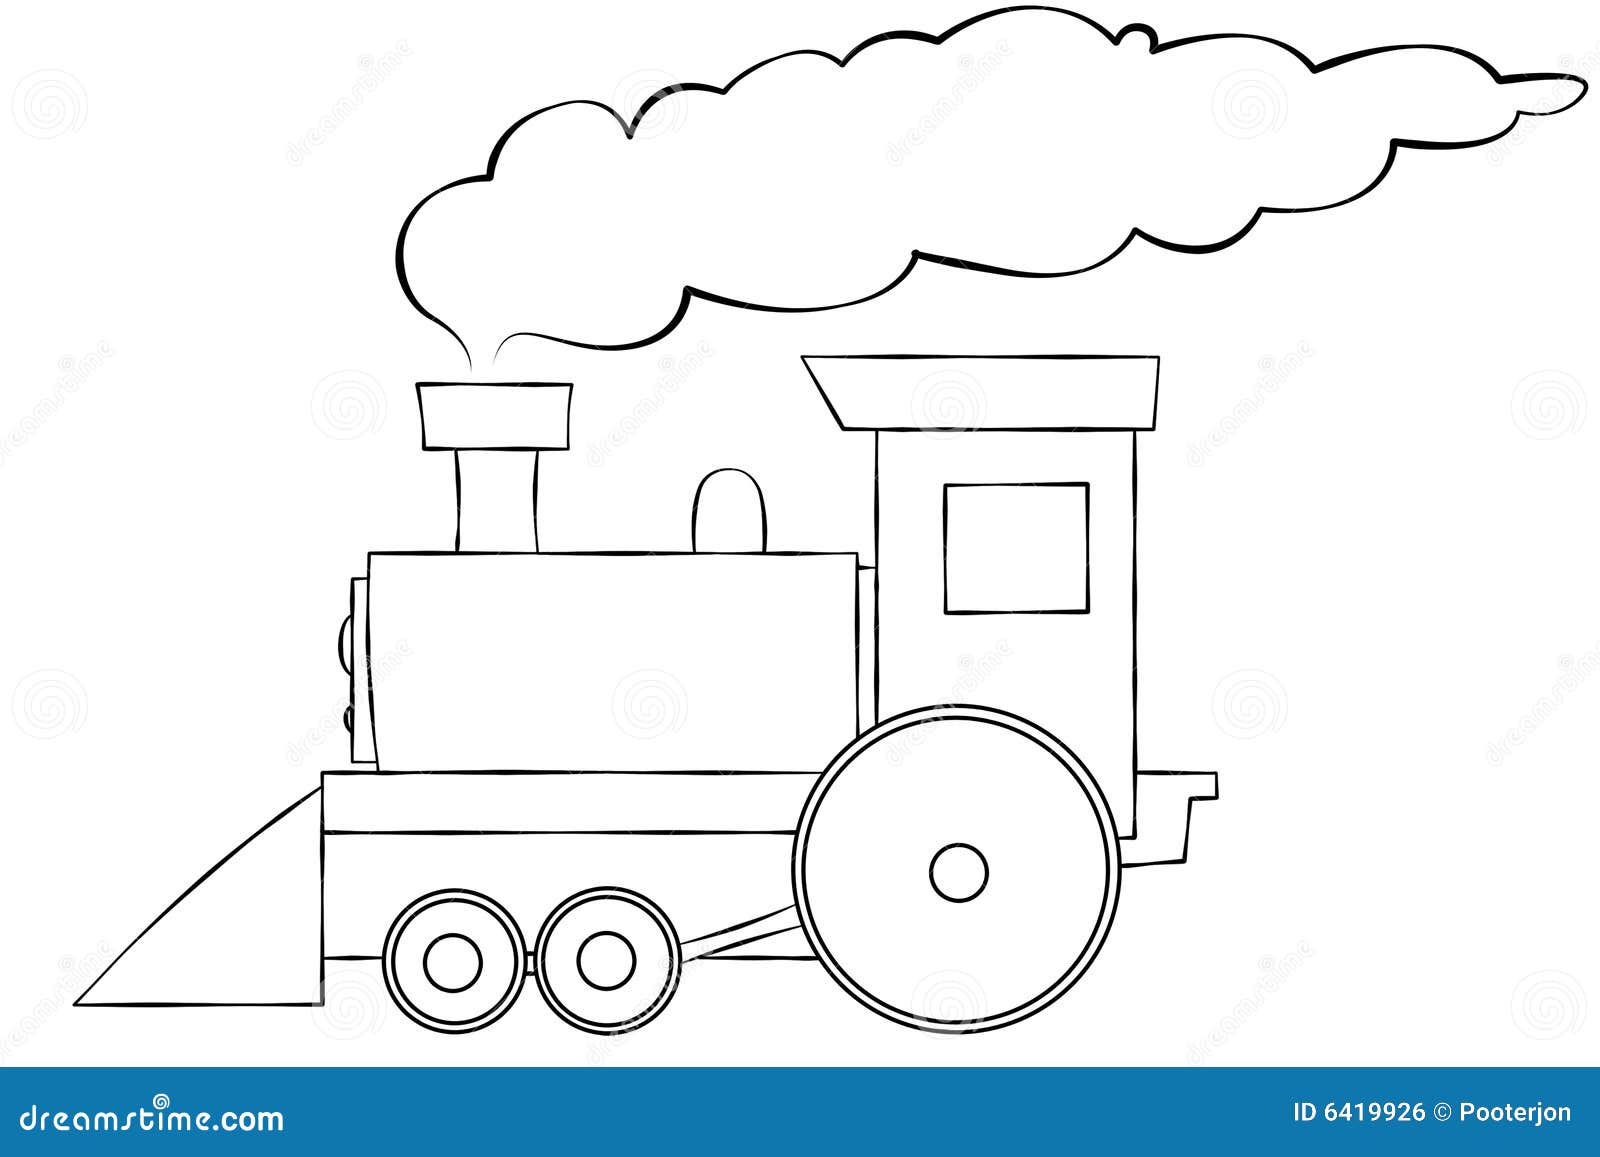 train smoke clipart - photo #5